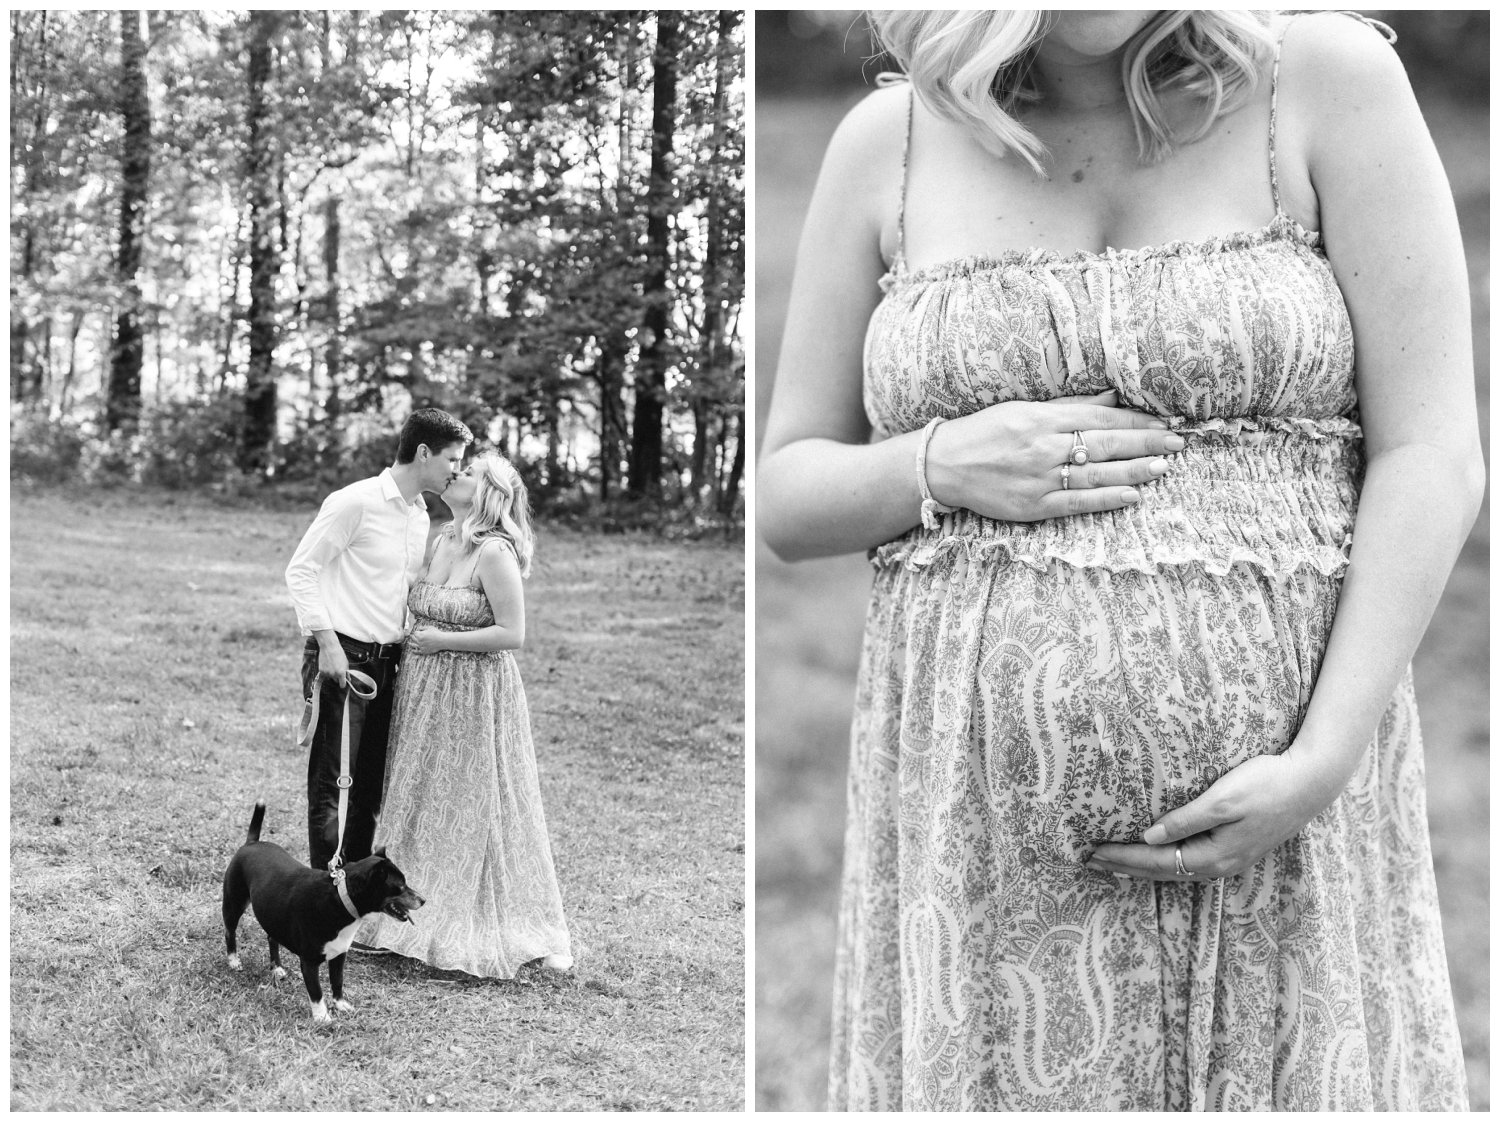 Lake Norman Jetton Park maternity session photos